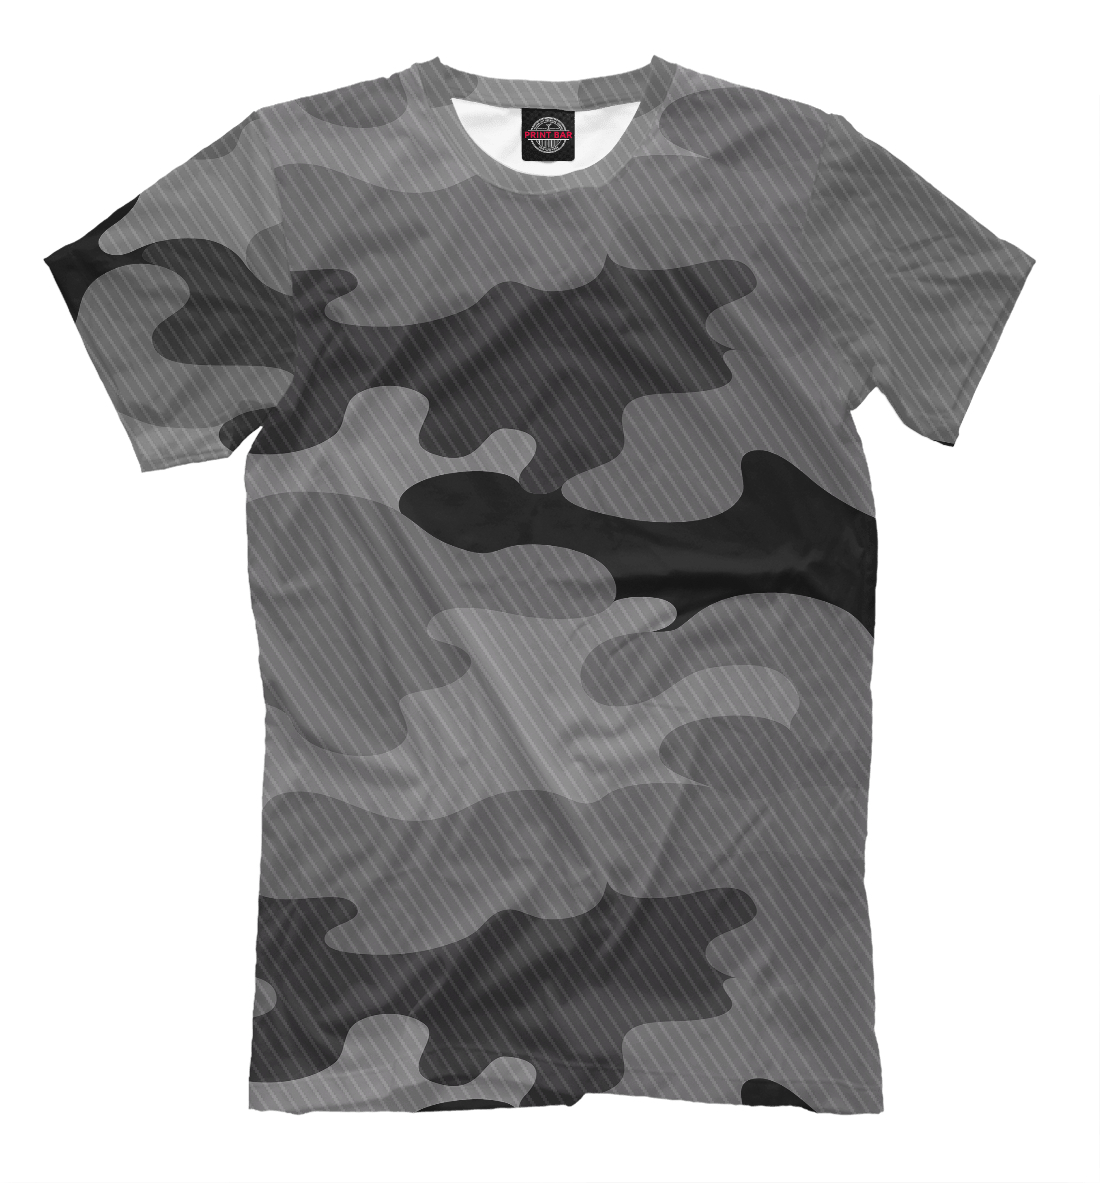 Детская Футболка camouflage gray для мальчиков, артикул APD-131416-fut-2mp